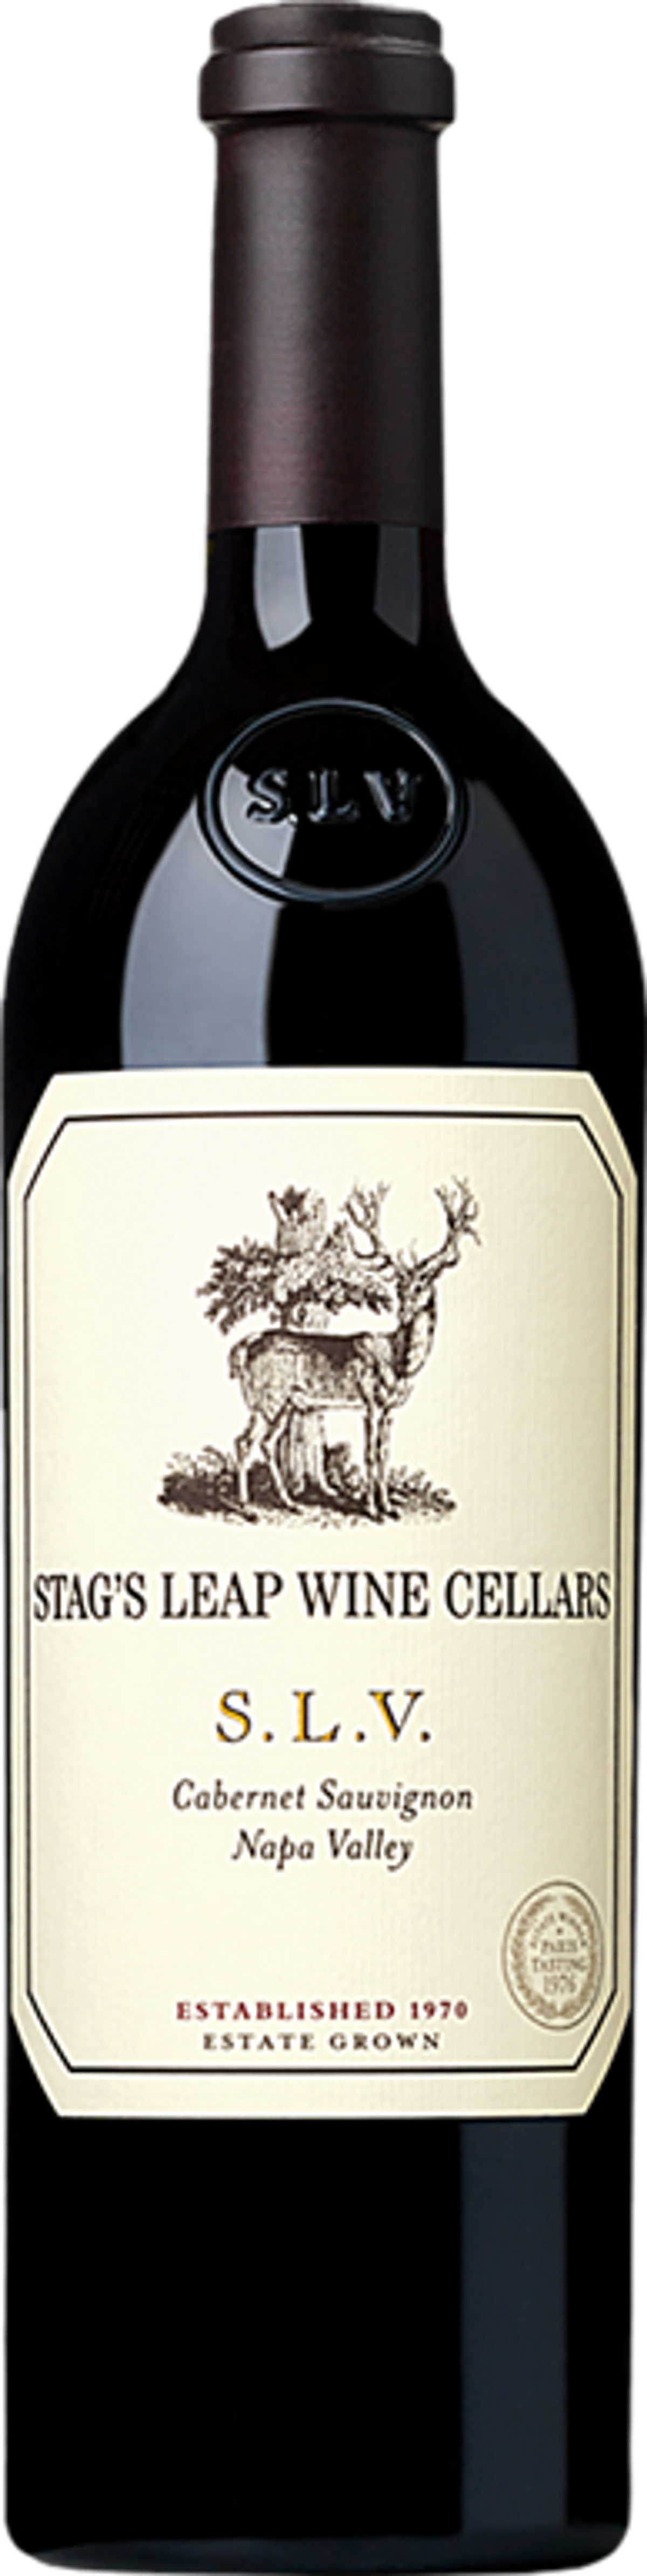 stags leap wine cellars 2018 slv cabernet sauvignon